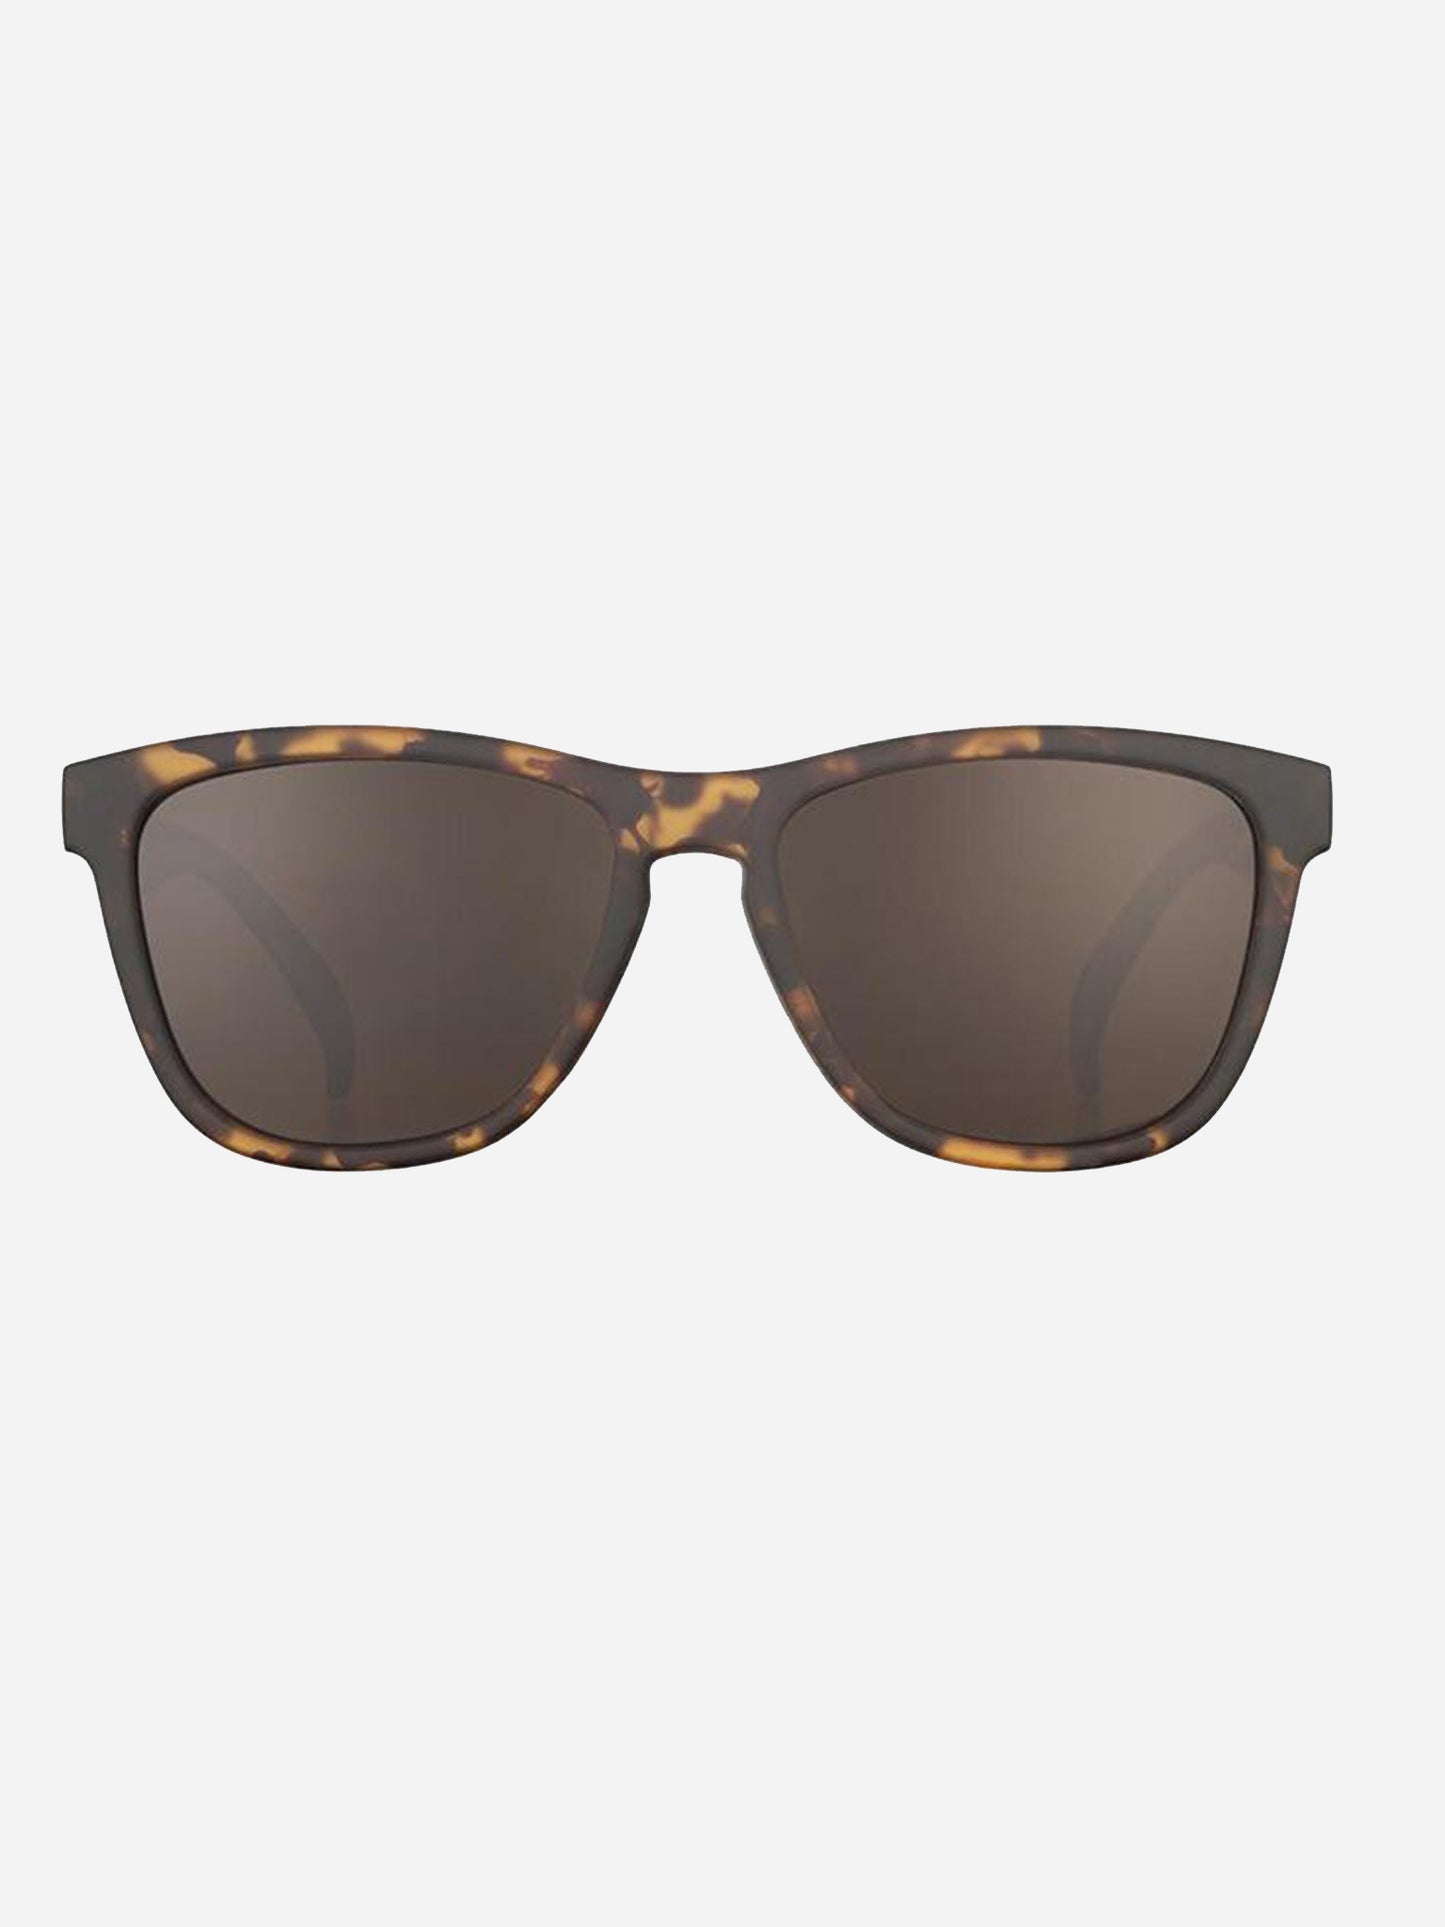 Goodr Bosley's Basset Hound Dreams Sunglasses